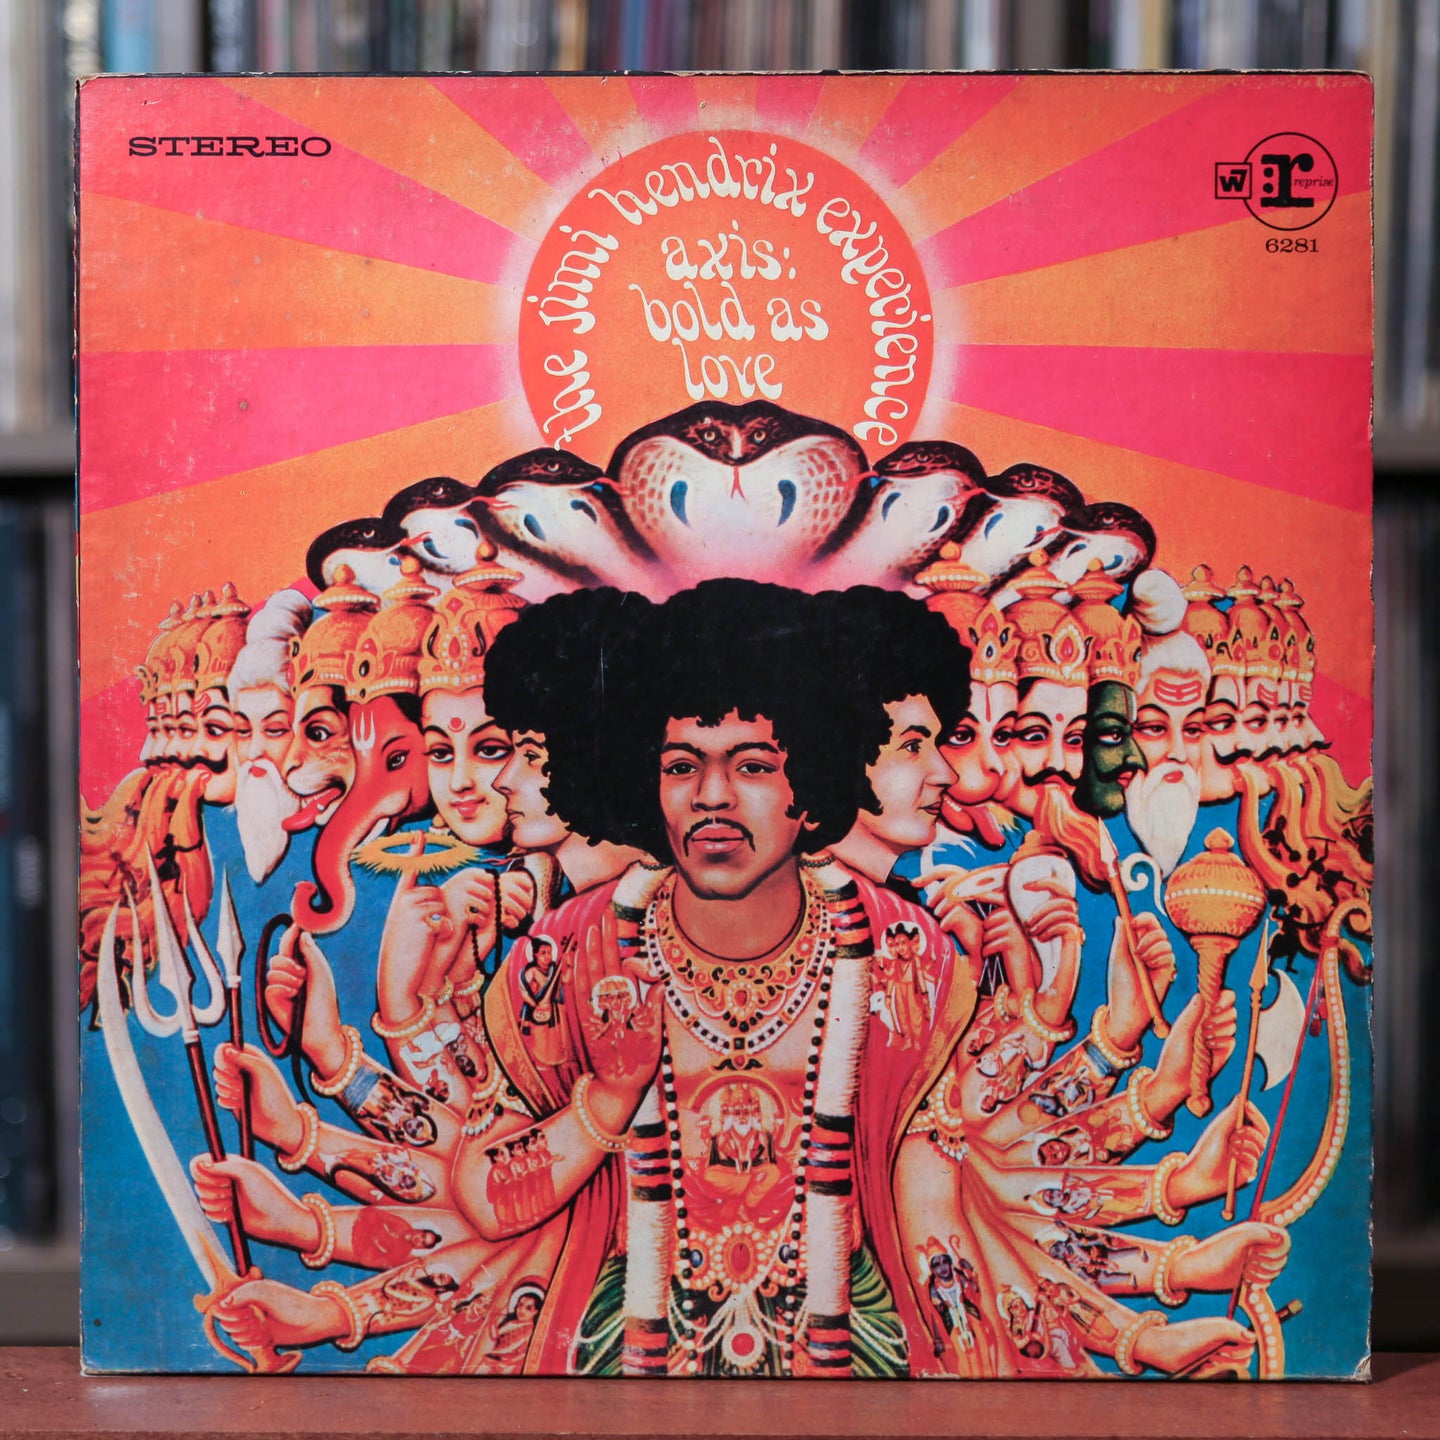 Jimi Hendrix - Axis: Bold As Love - 1968 Reprise, VG+/VG+